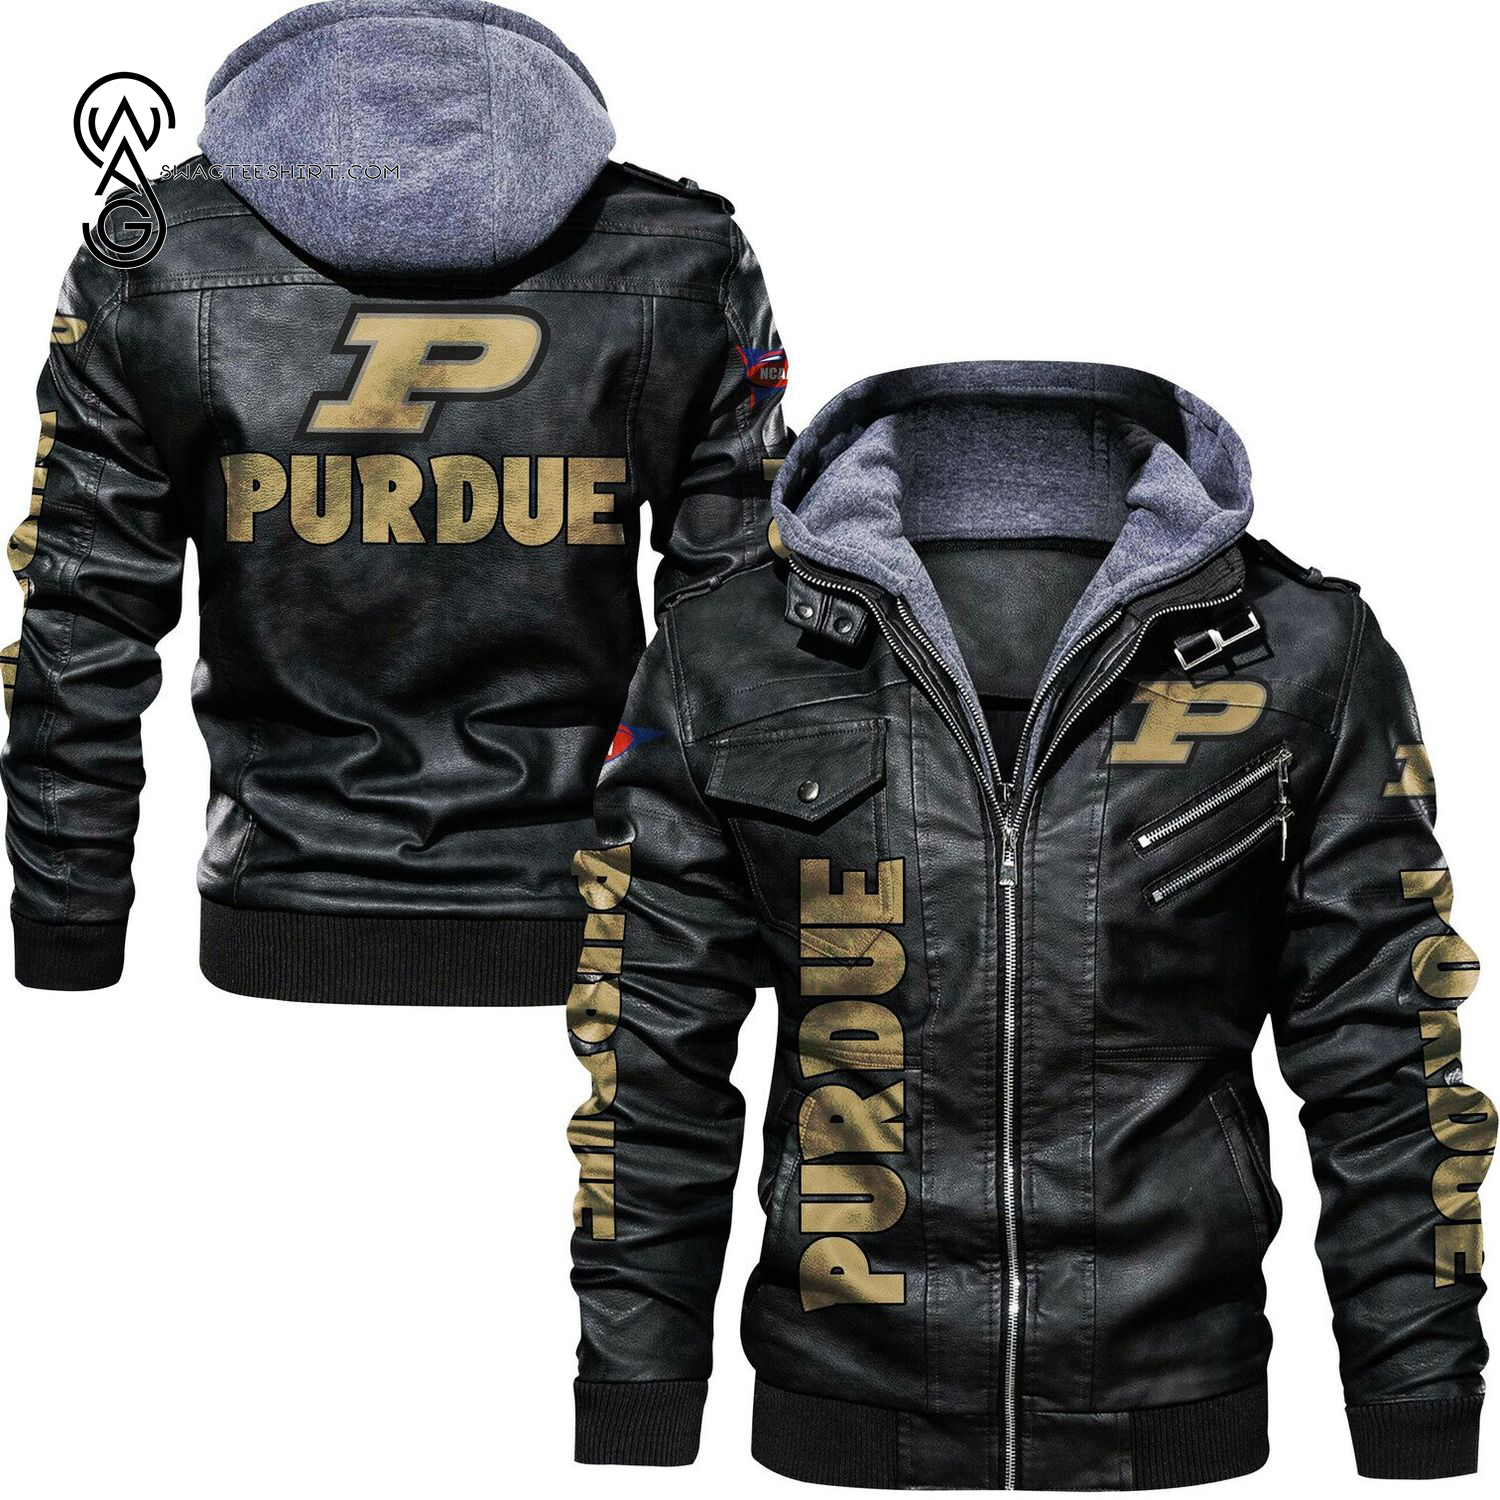 Purdue Boilermakers Football Team Leather Jacket